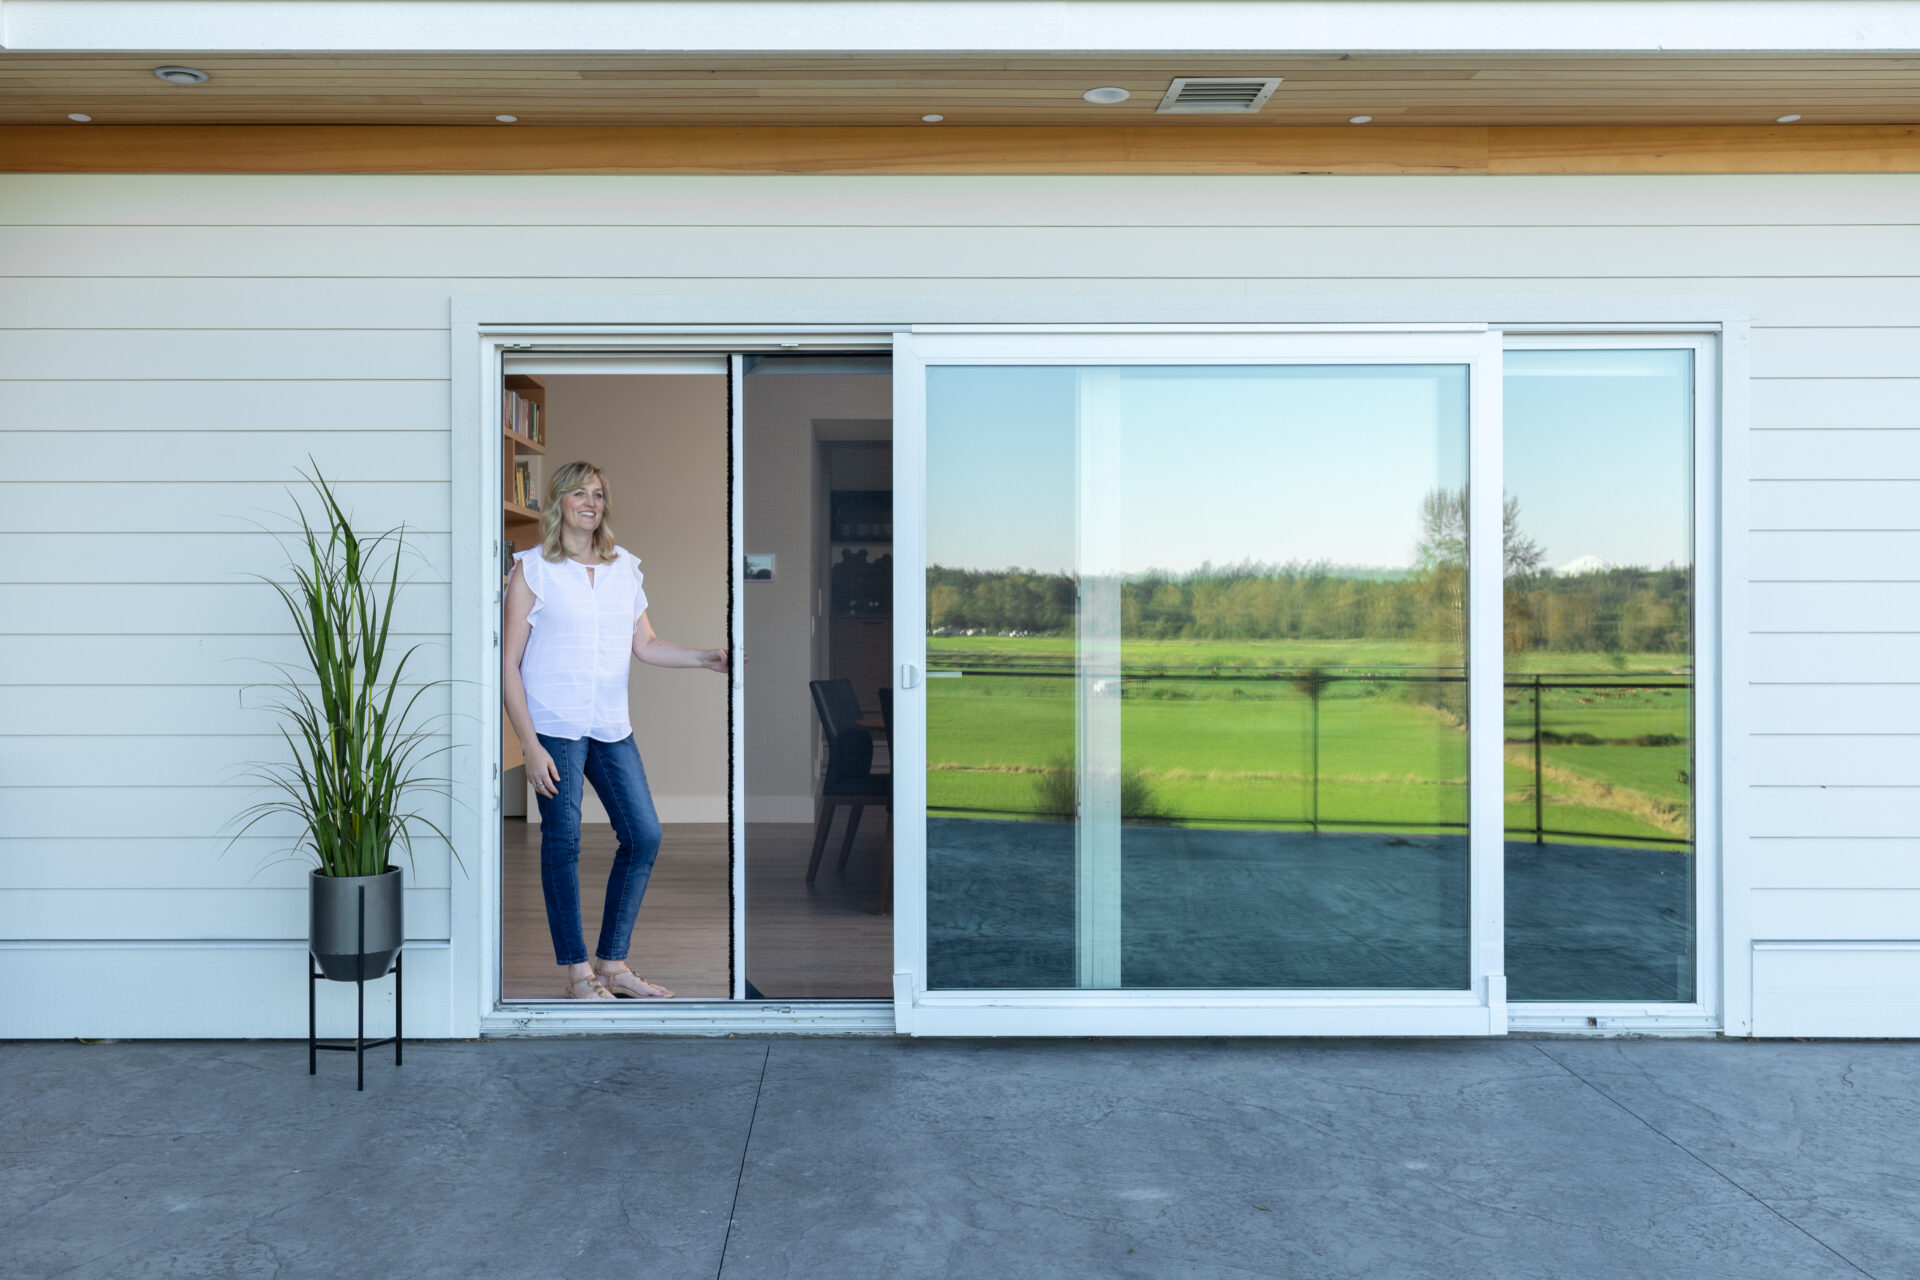 Woman opens her Phantom Retractable Screen Door to let fresh air into her home.